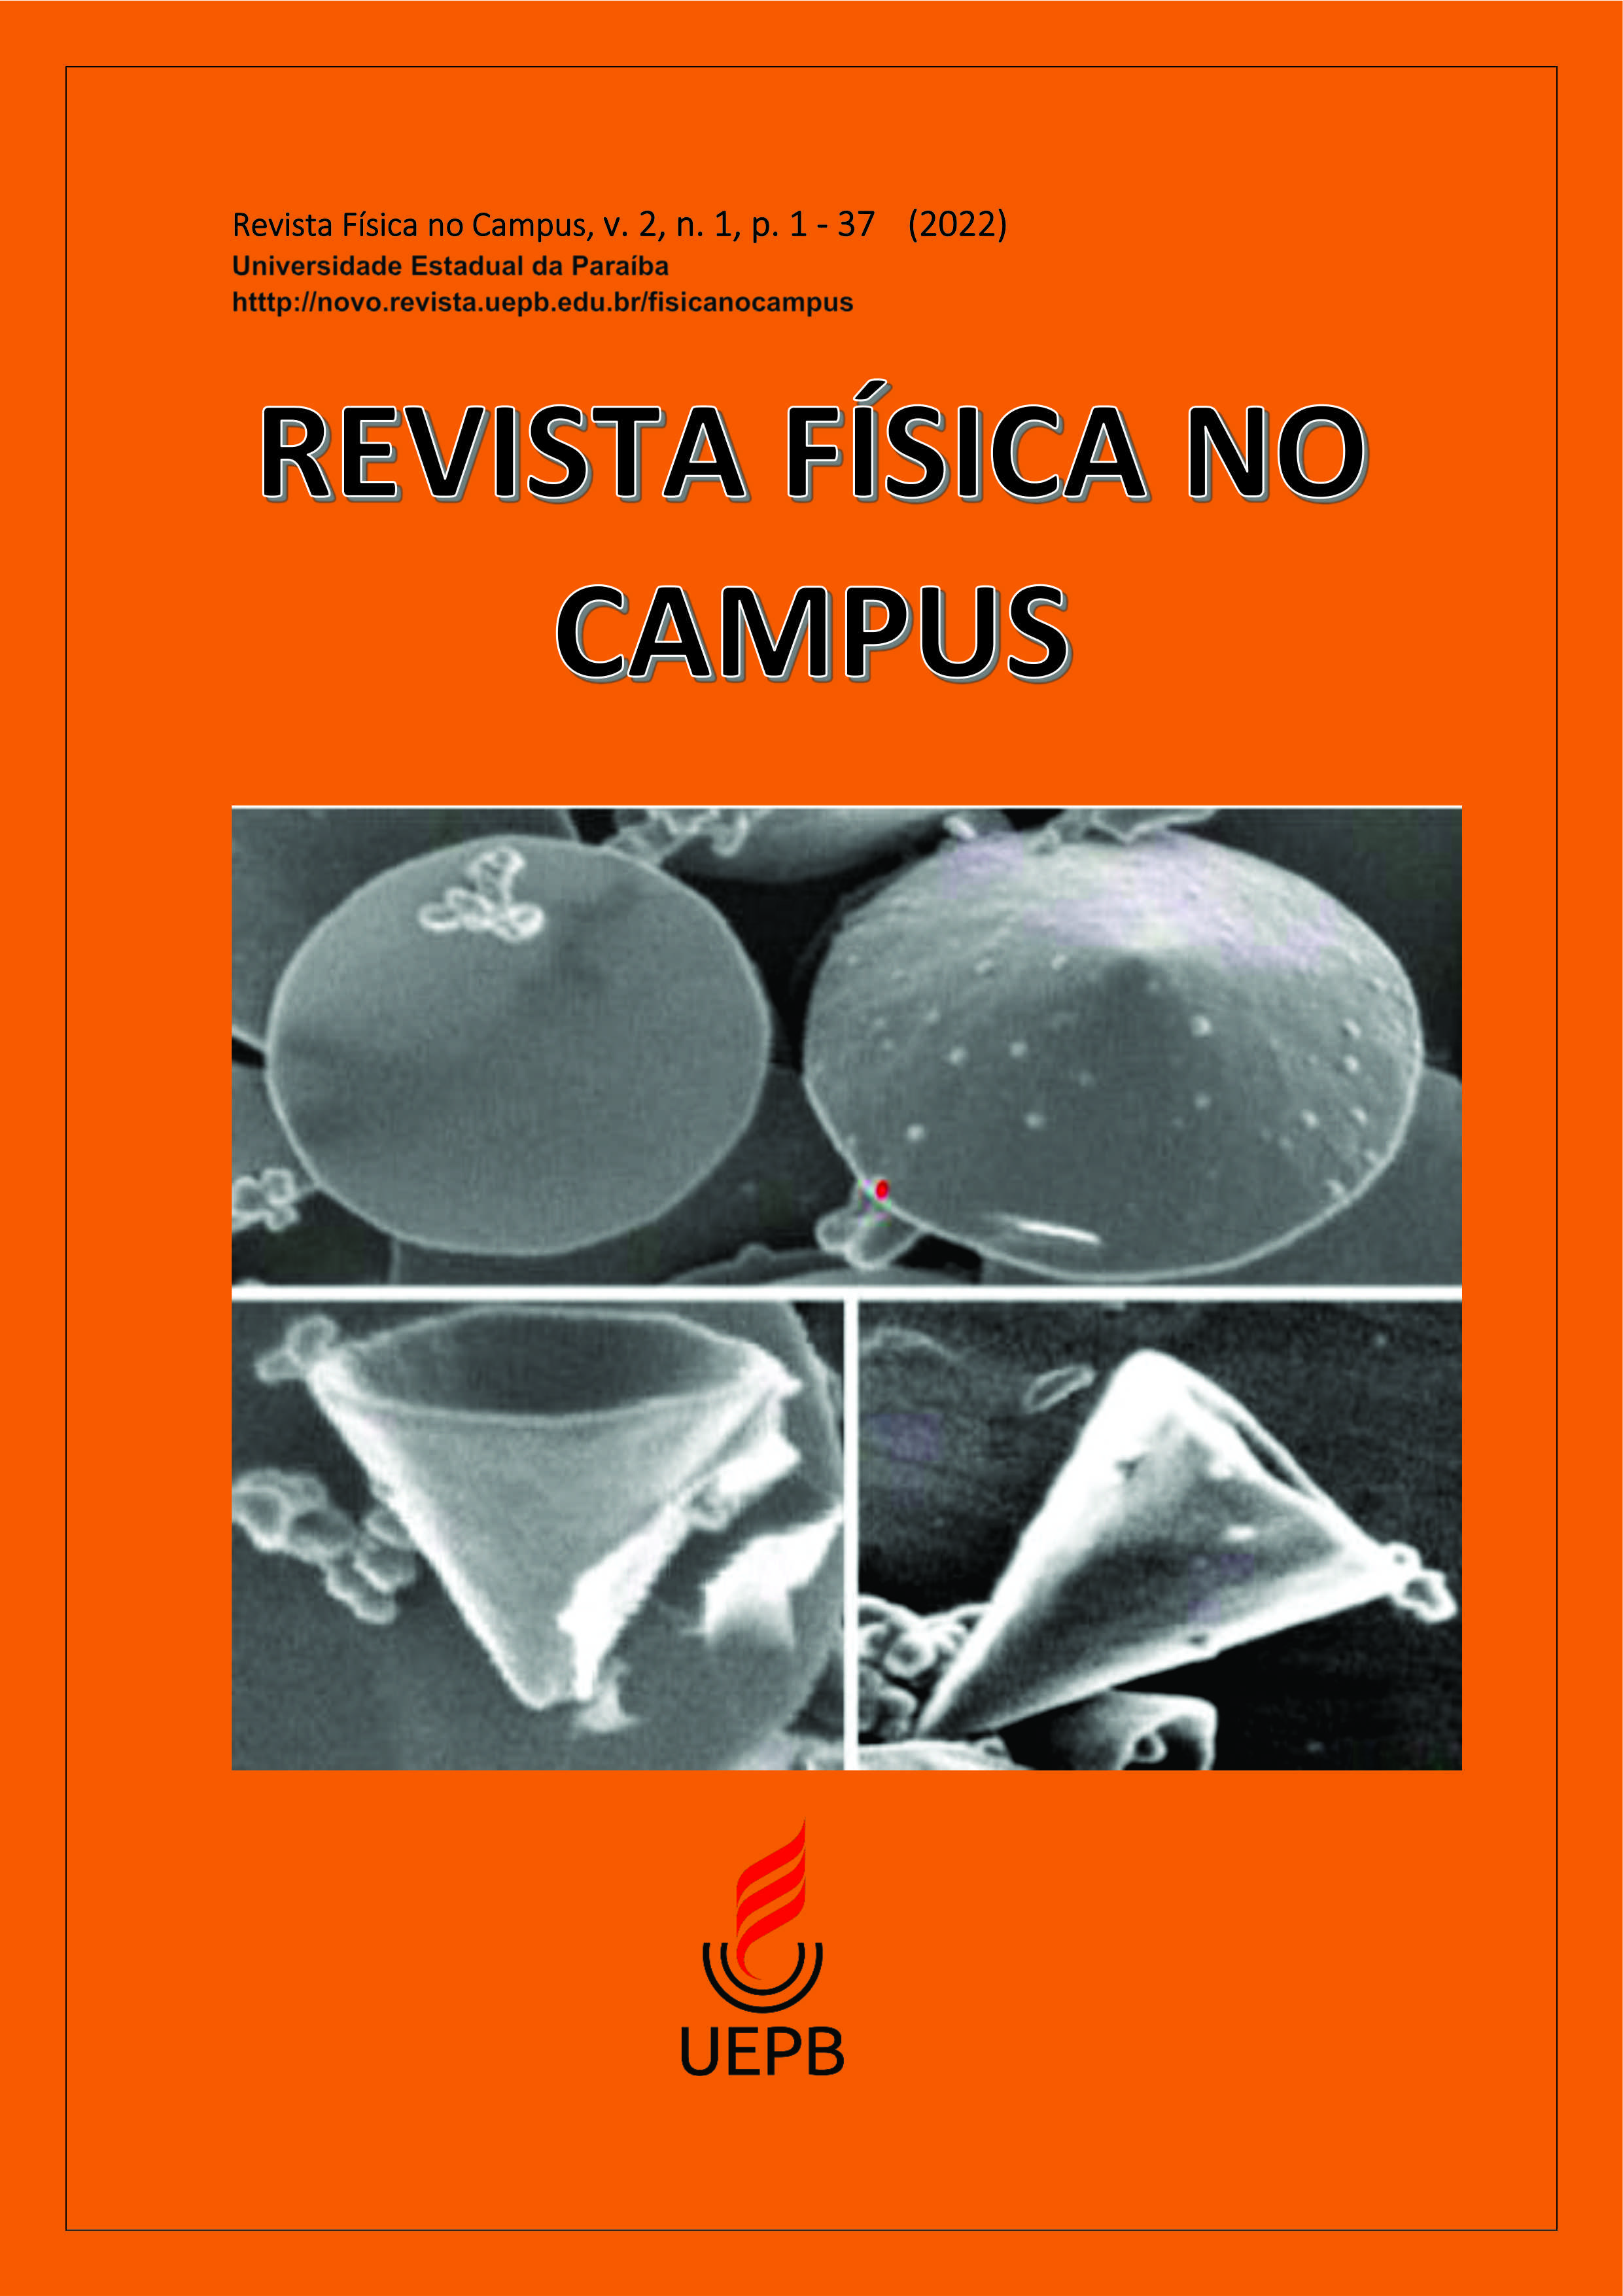 					Visualizar v. 2 n. 1 (2022): Revista Física no Campus
				